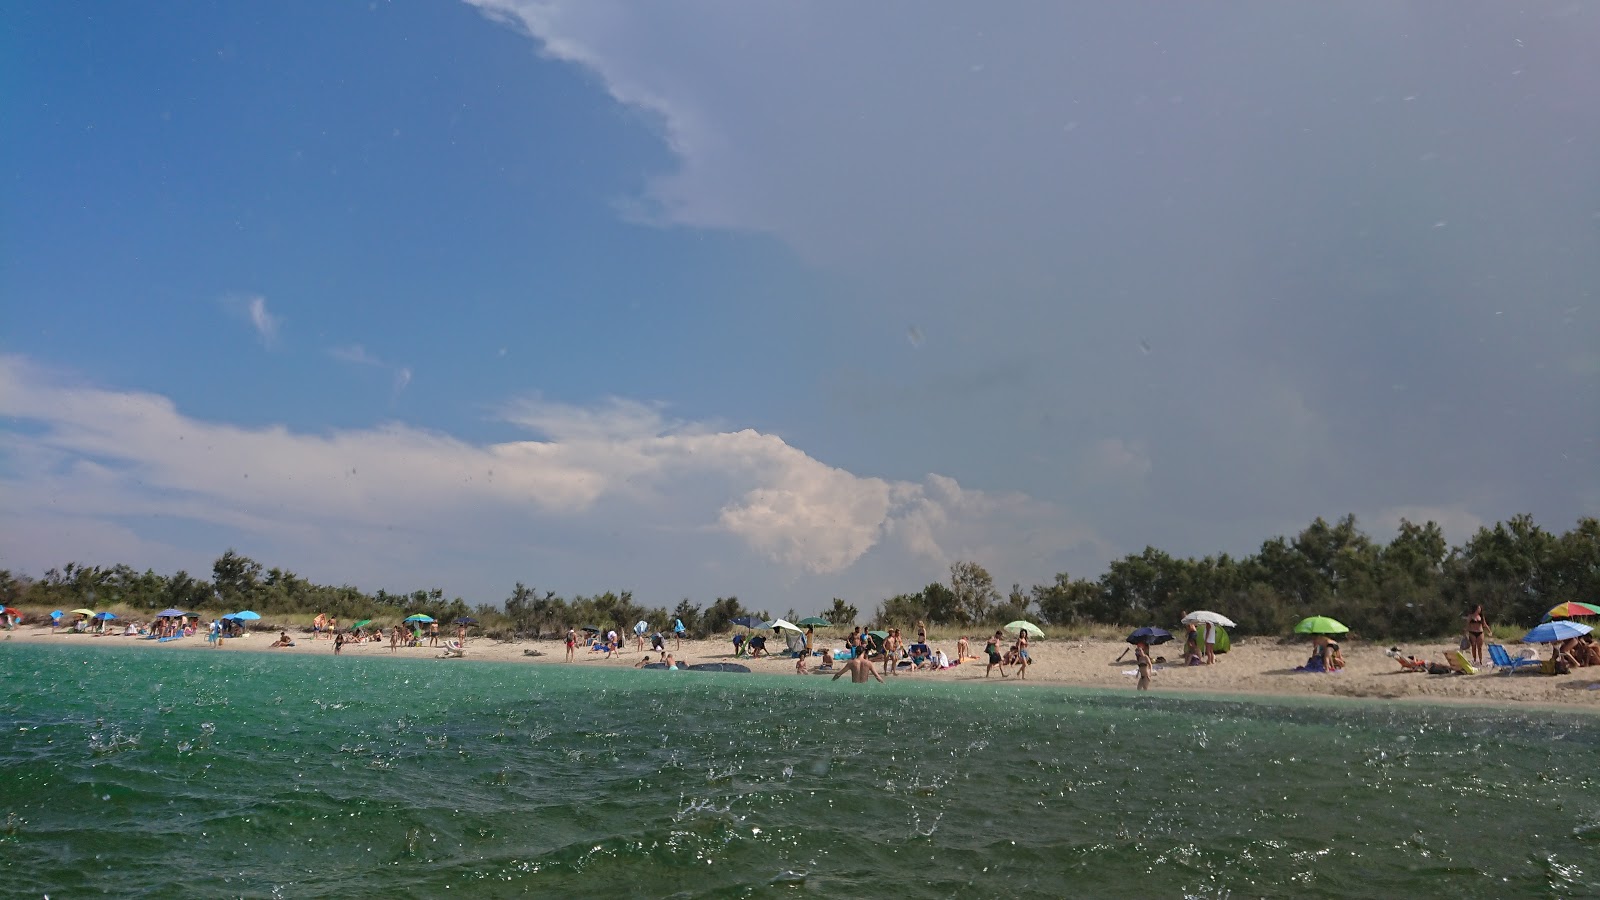 Foto de Spiaggia di Torre Guaceto - lugar popular entre los conocedores del relax